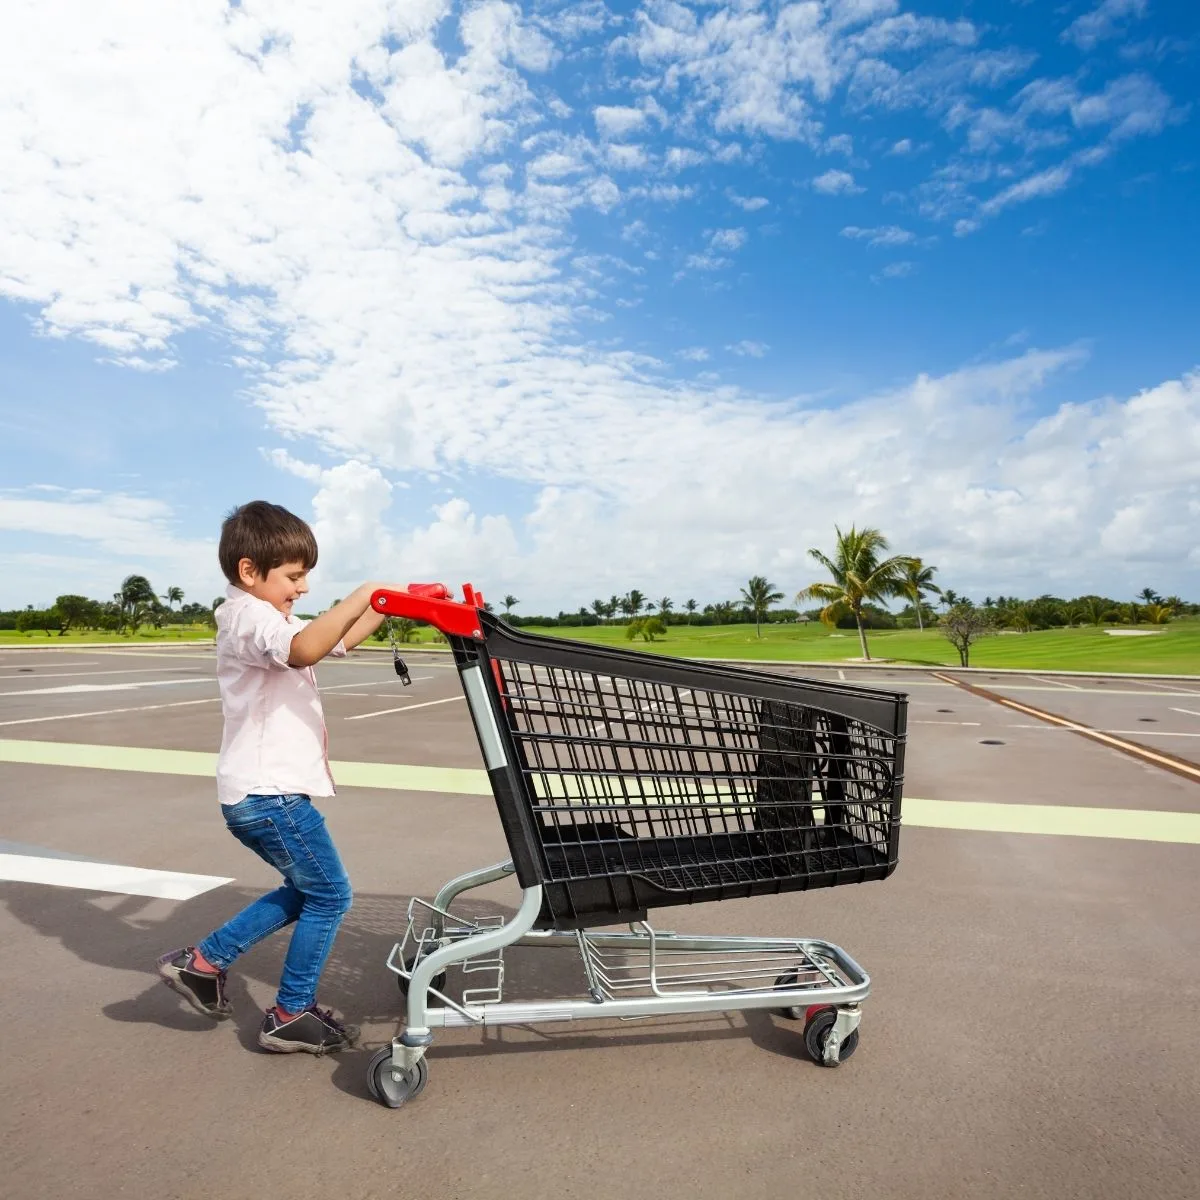 boy returning shopping cart in a parking lot